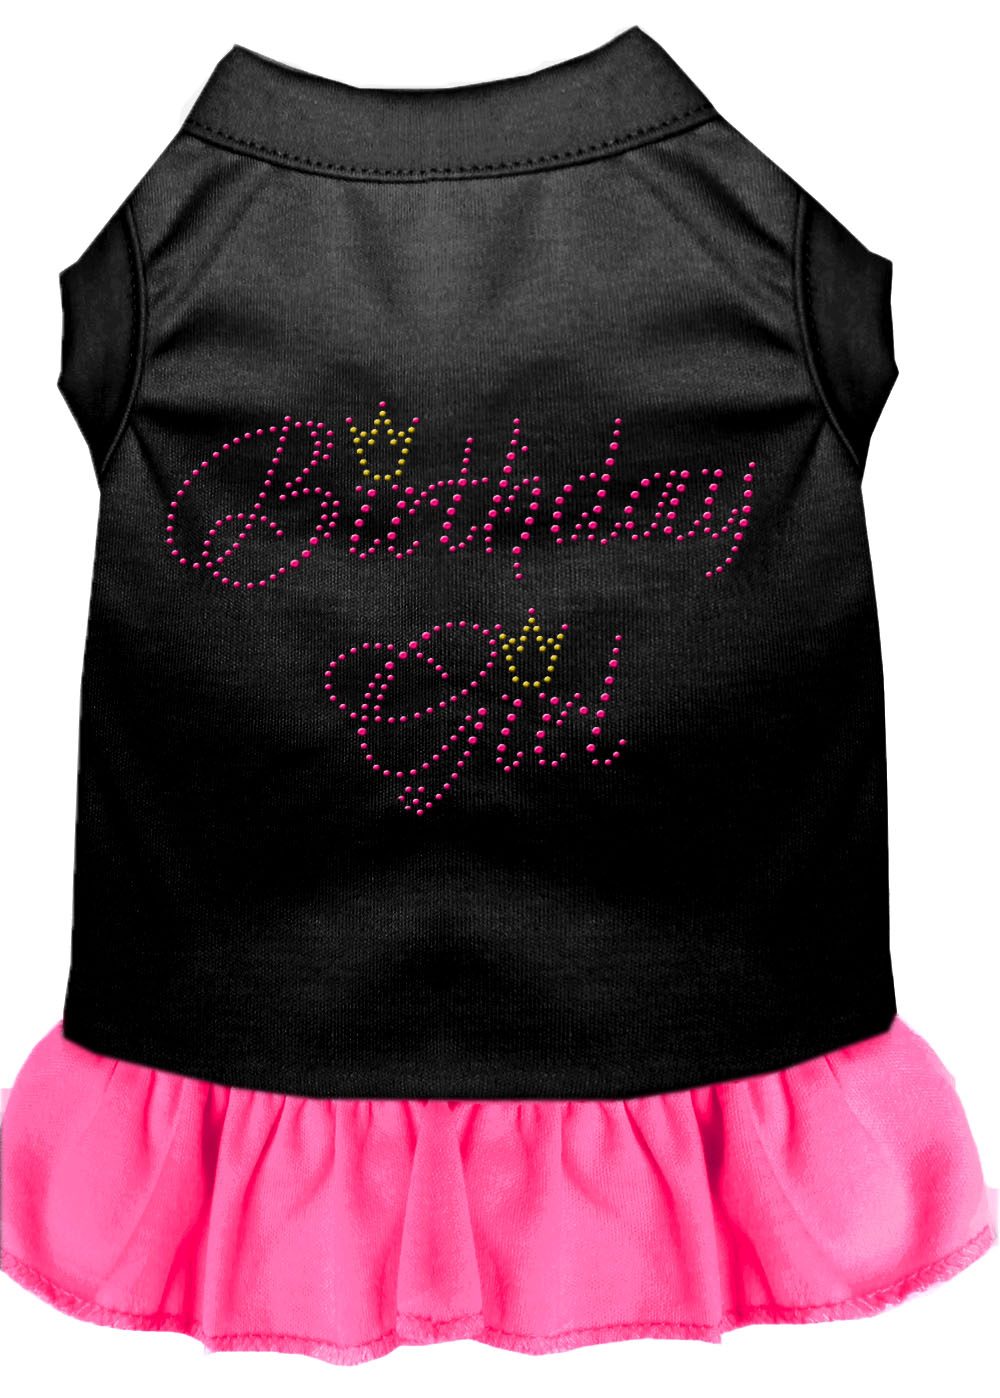 Birthday Girl Rhinestone Dress Black with Bright Pink XXL